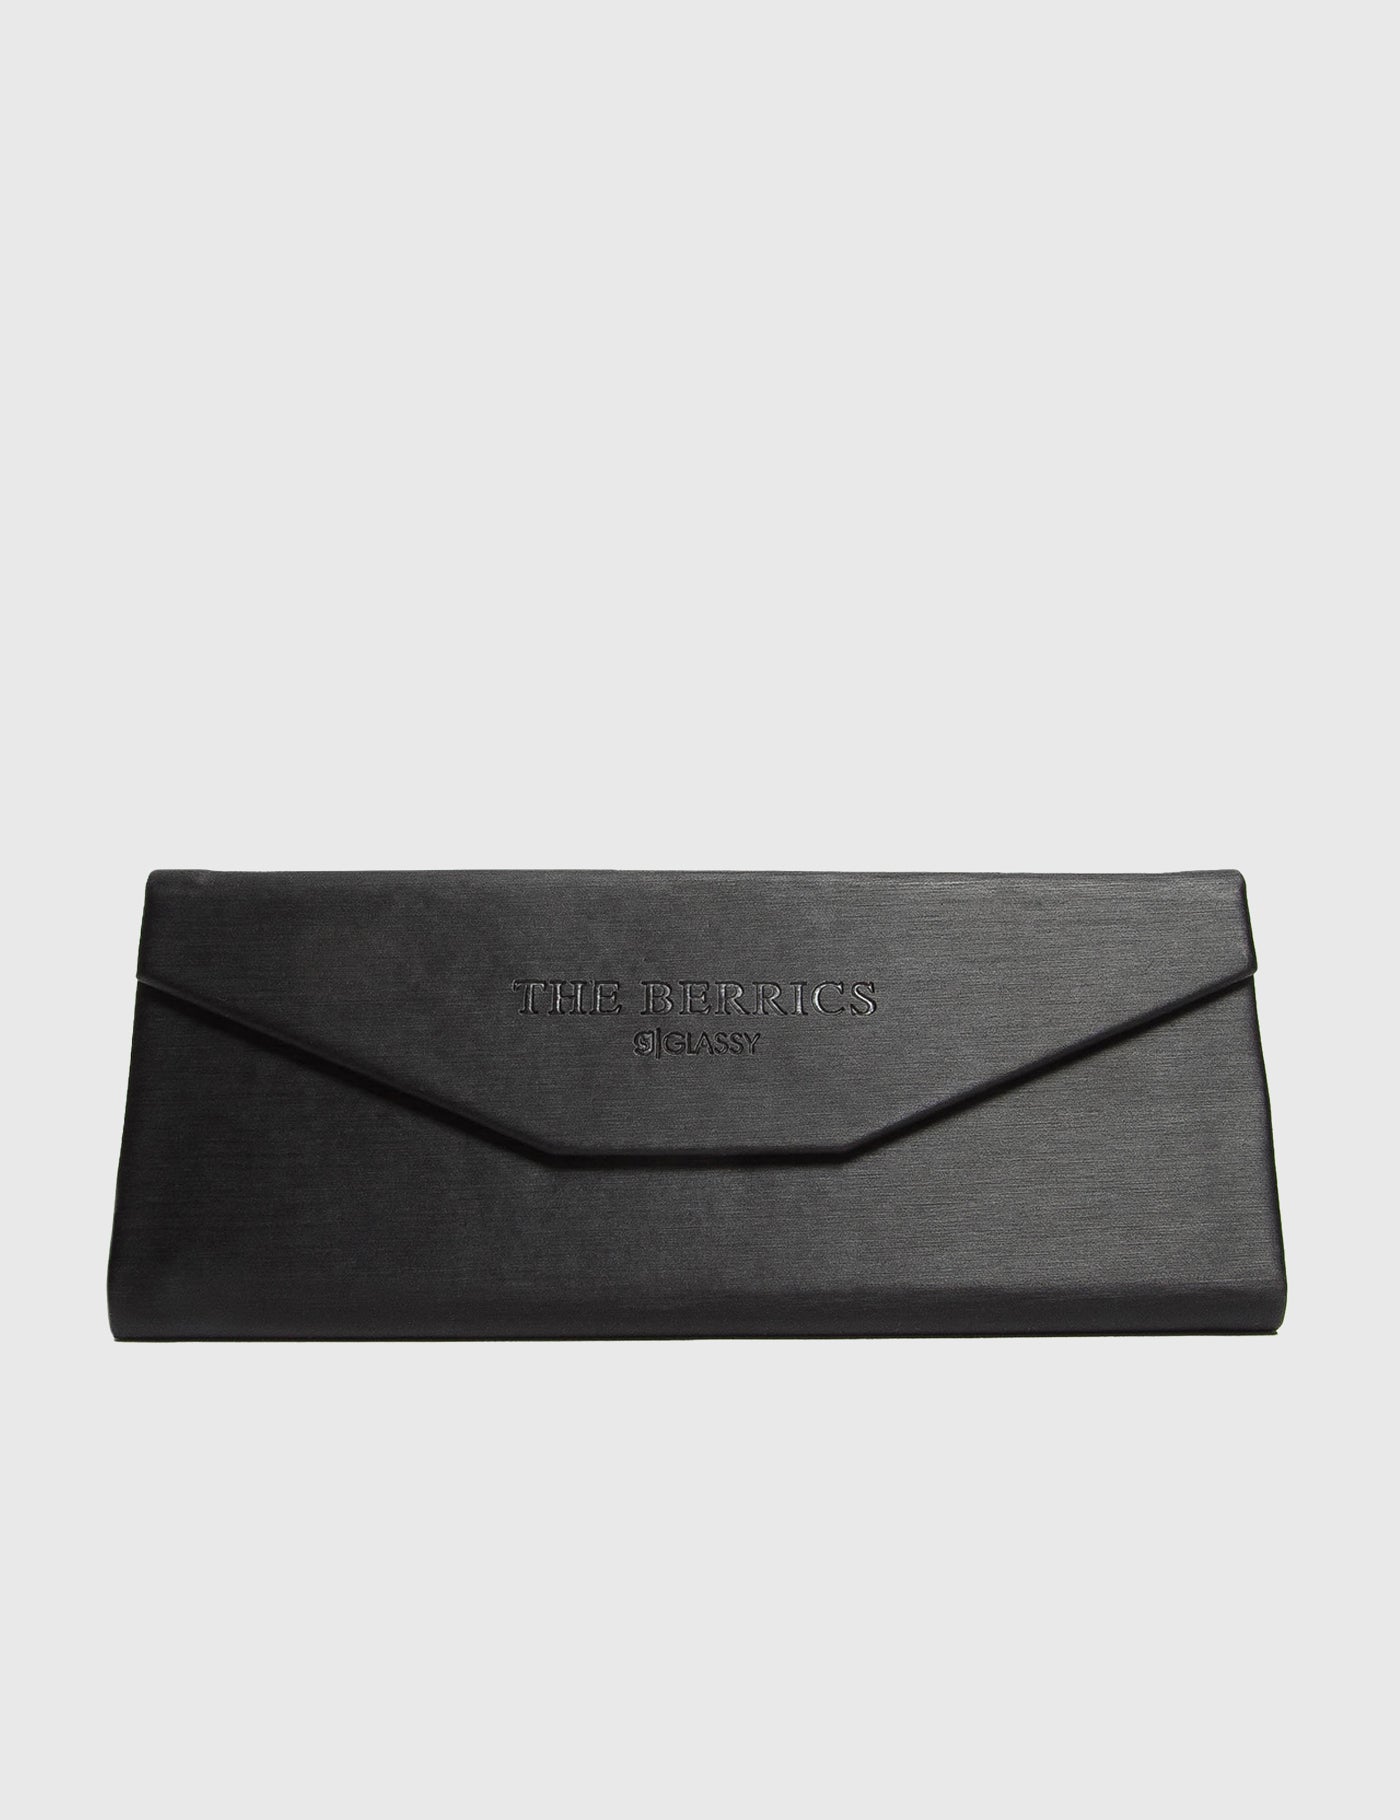 Glassy X Berrics - Mikemo Premium Polarized w/ Autographed Box